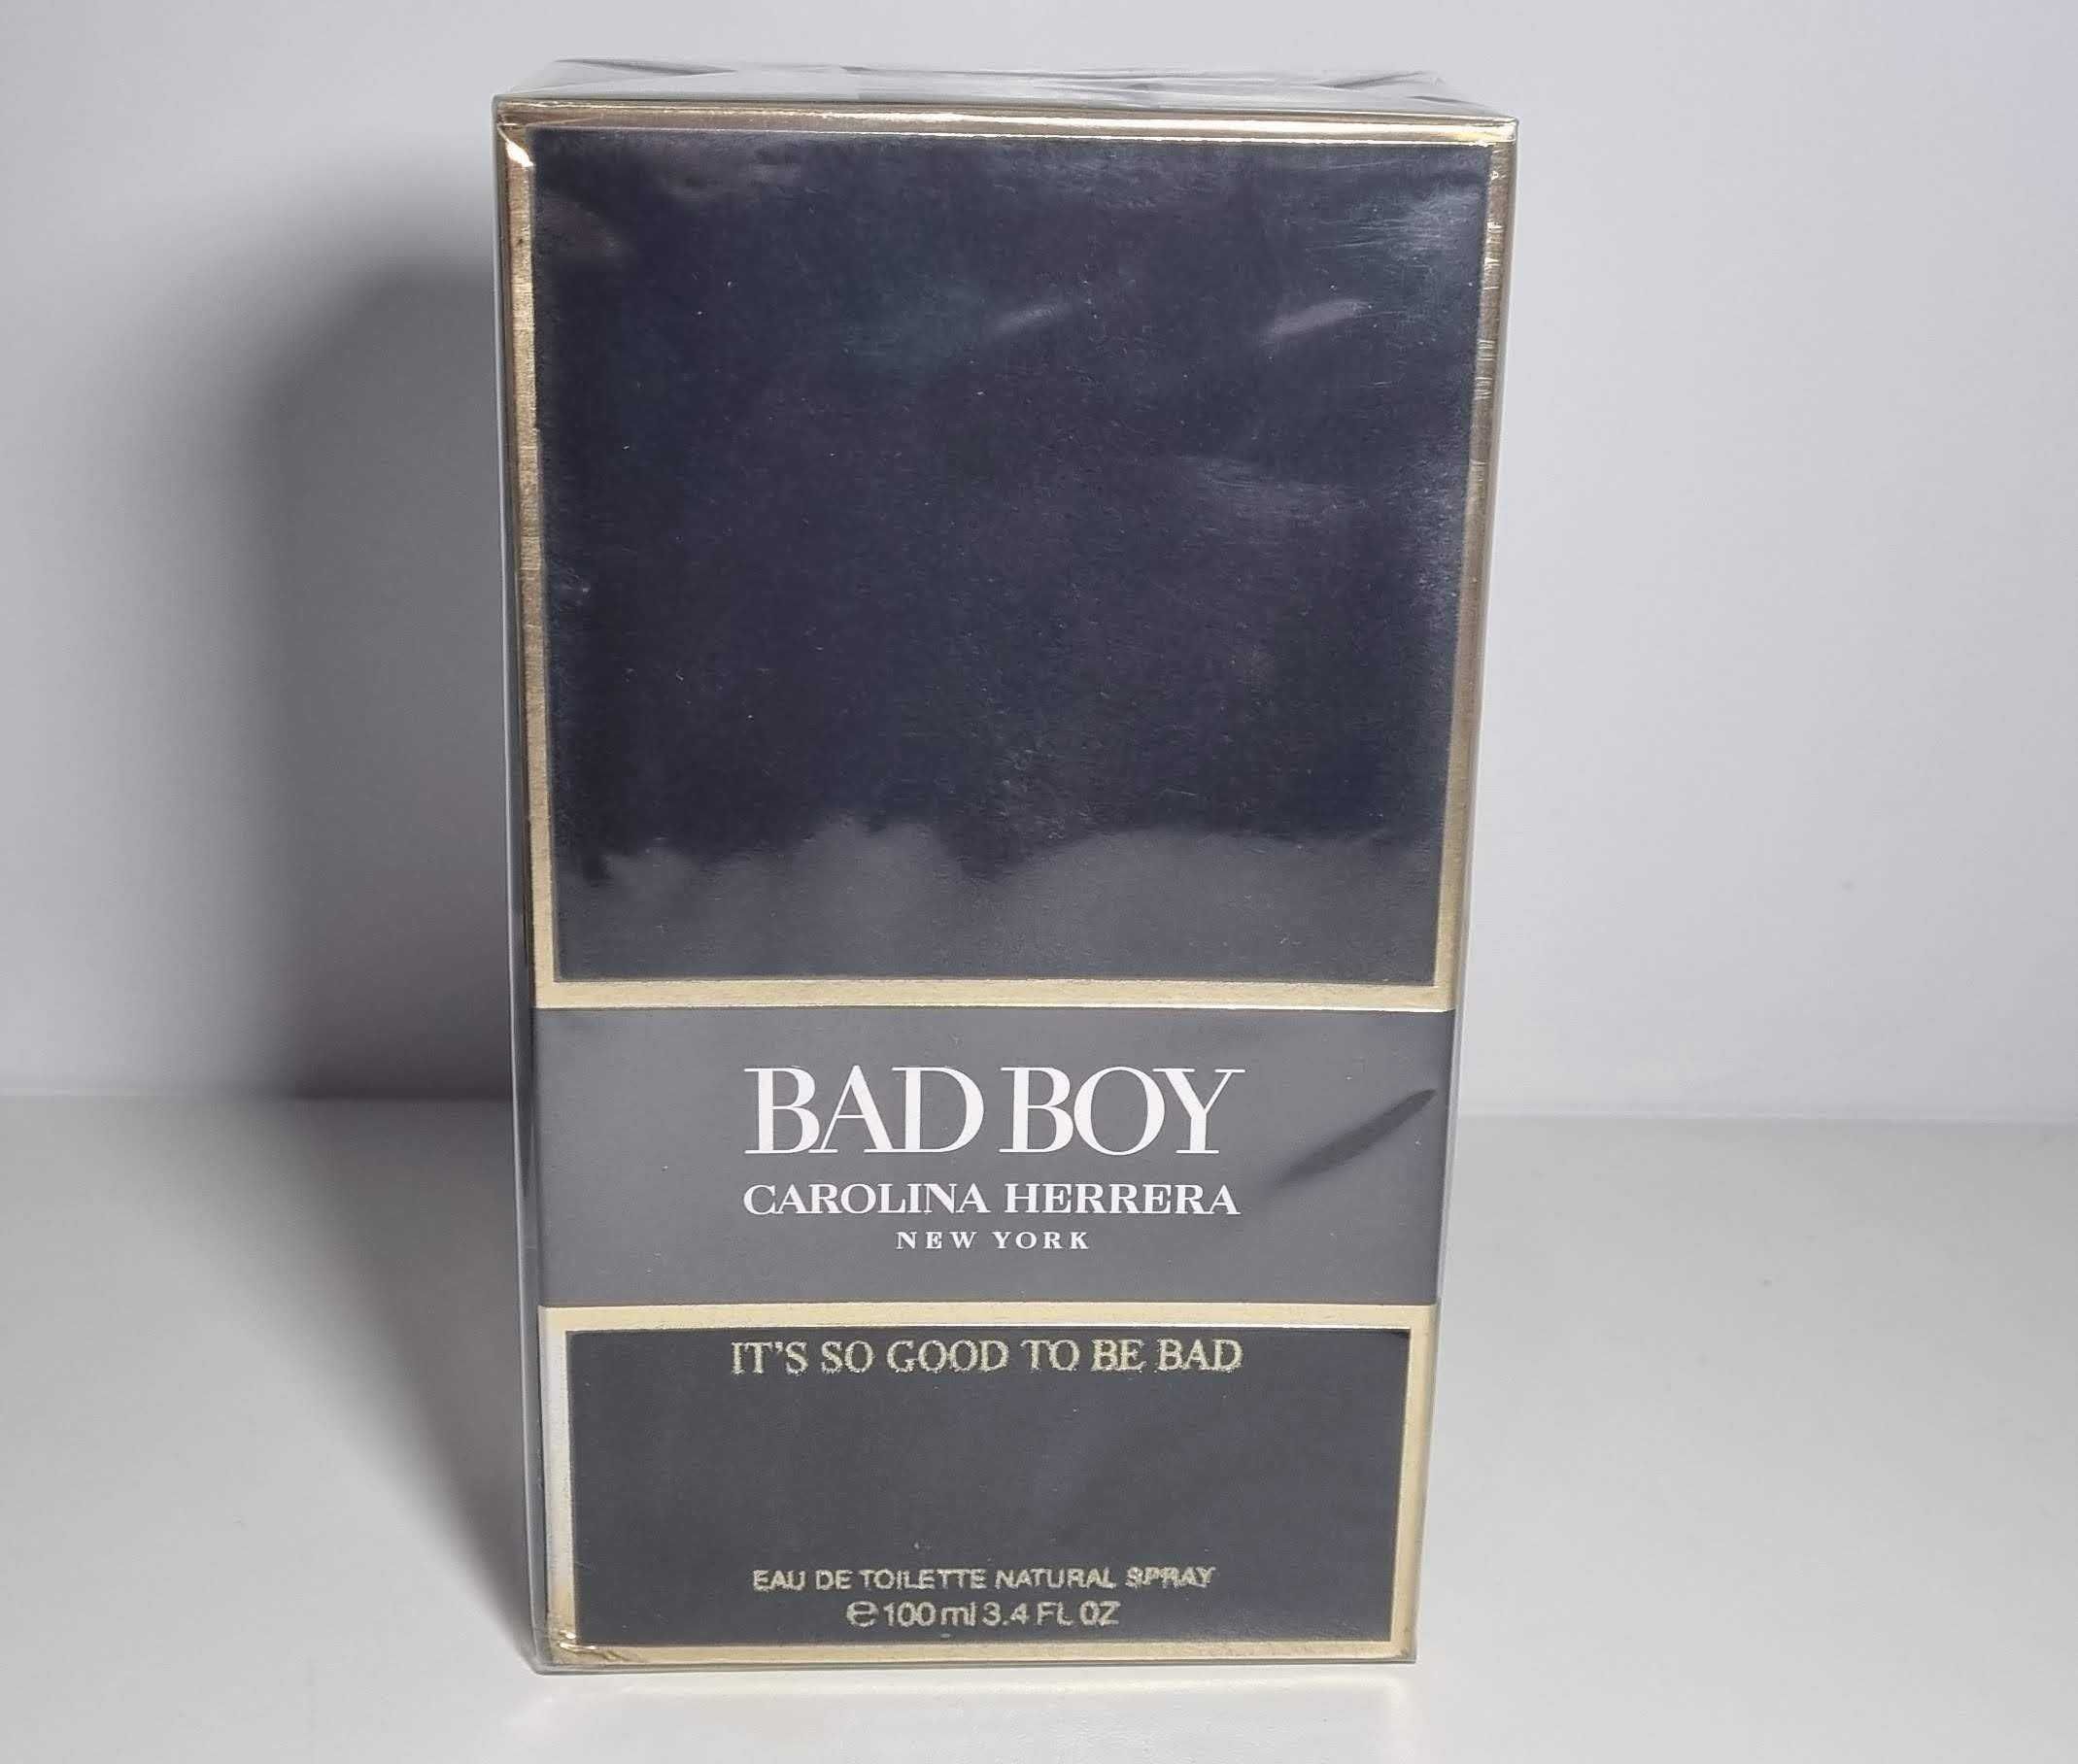 Parfum Carolina Herrera - Bad Boy, Parfum sau Bad Boy Cobalt, sigilat